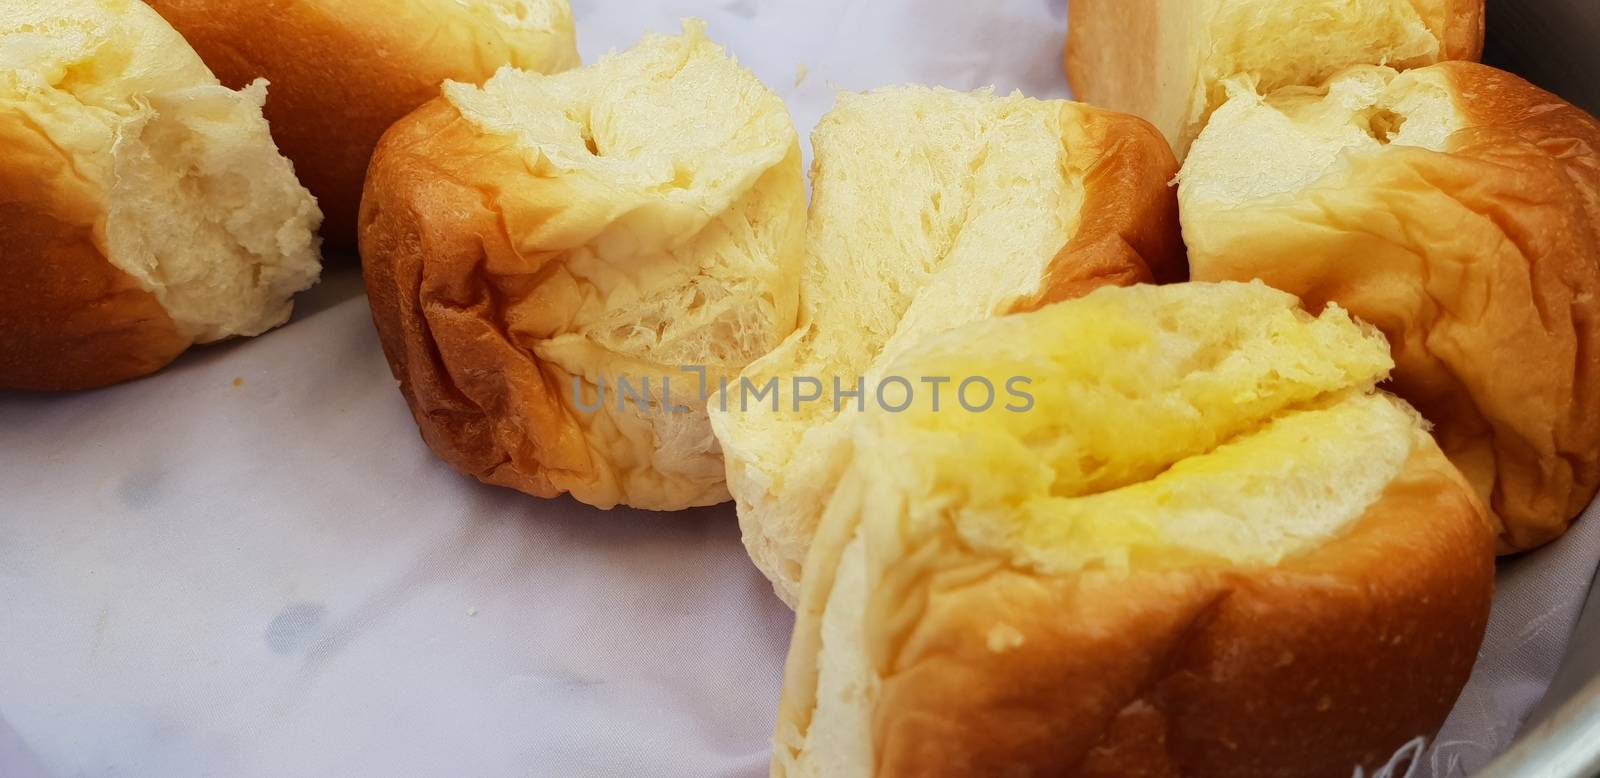 Steamed Butter Buns at food market or restaurant by PongMoji